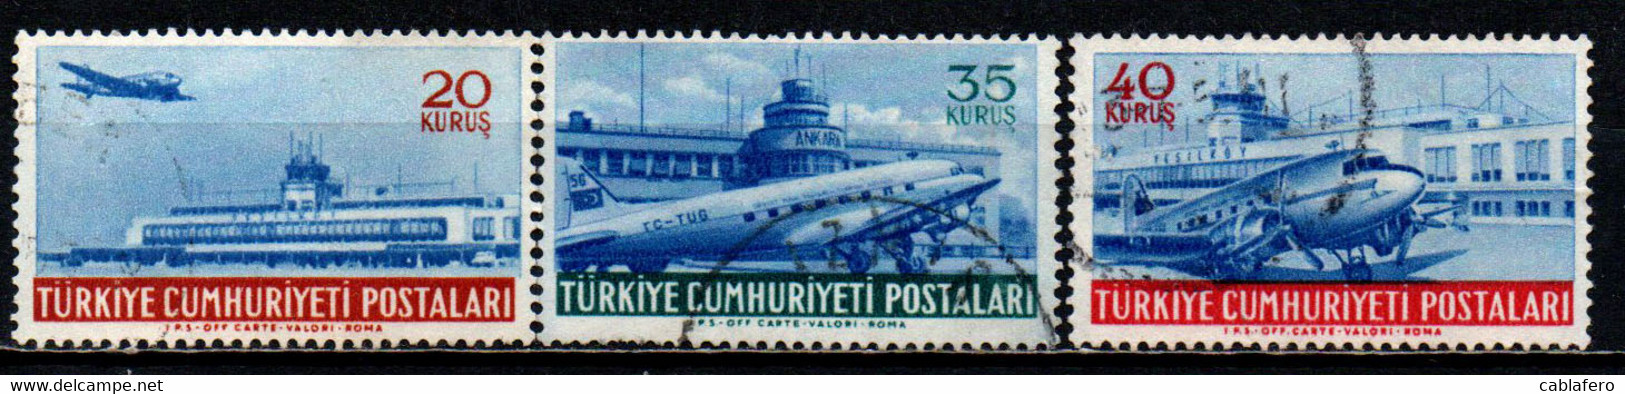 TURCHIA - 1954 - AEROPORTO DI YESILKOY E DI ANKARA - USATI - Airmail